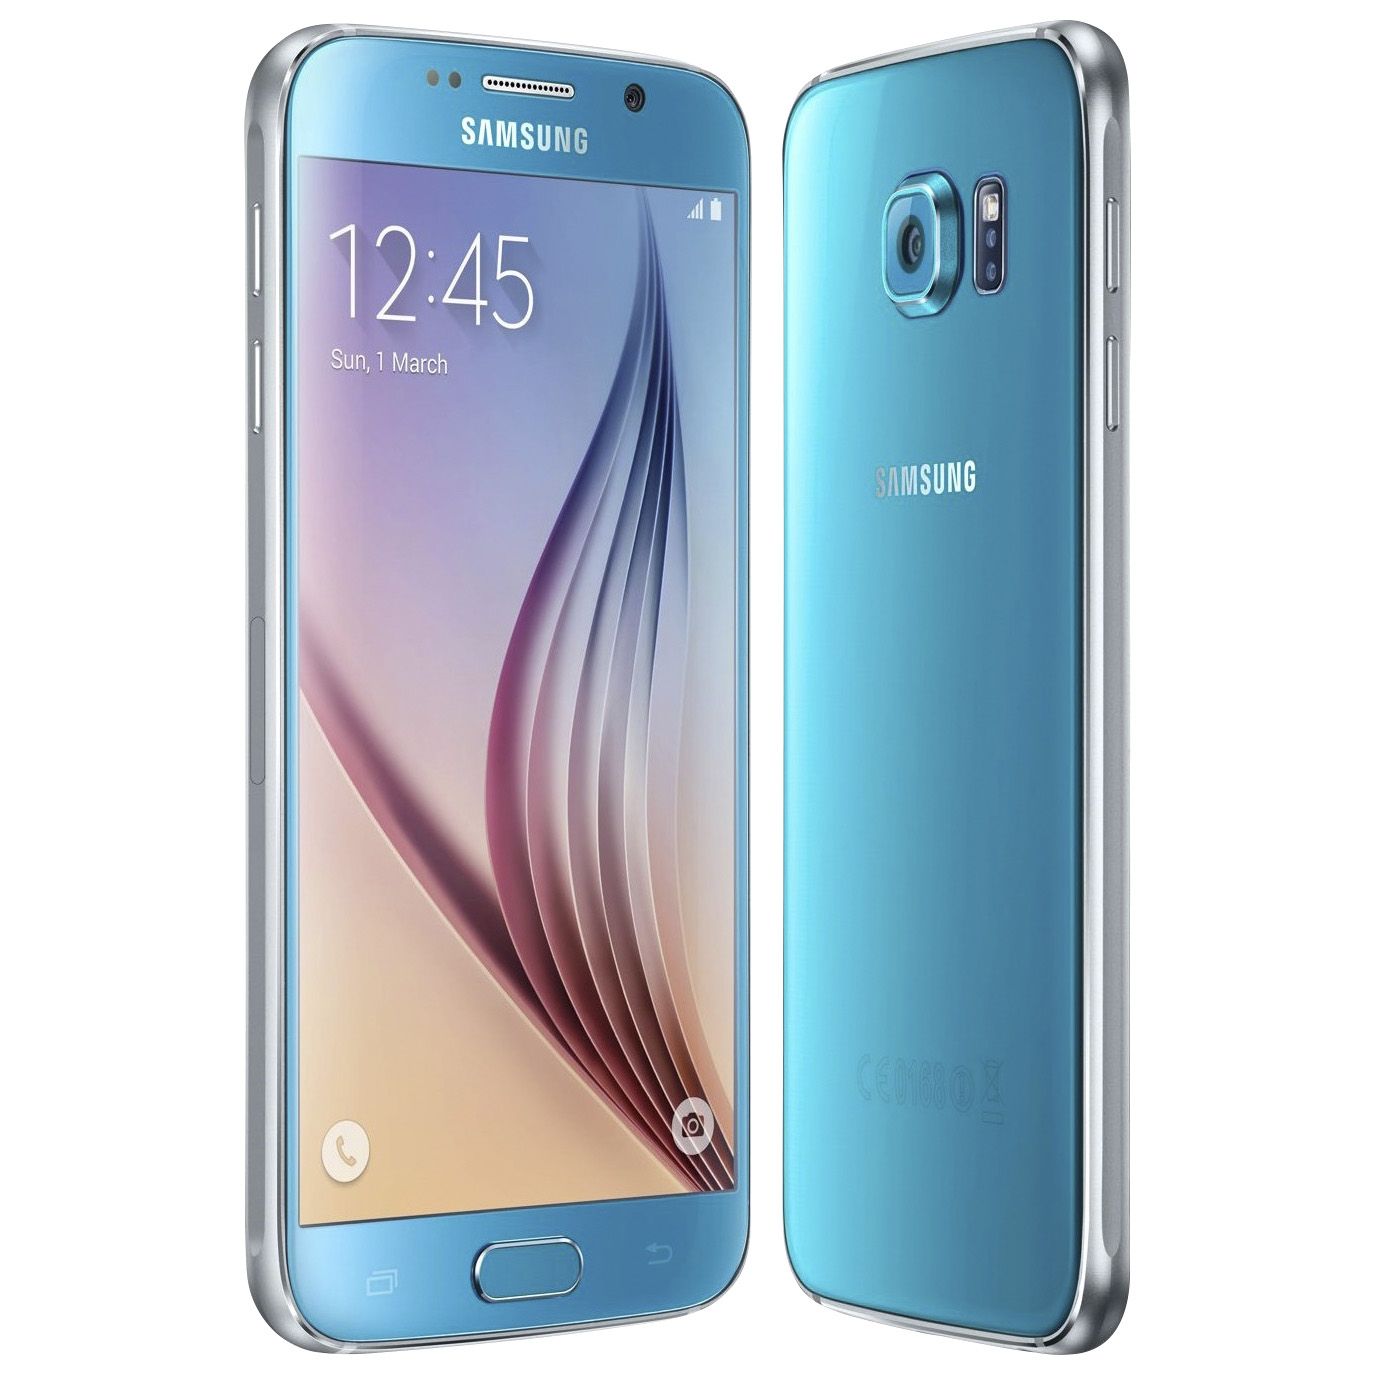 beven medeklinker Klacht Fingerhut - Samsung Galaxy S6 32GB Unlocked Android Smartphone